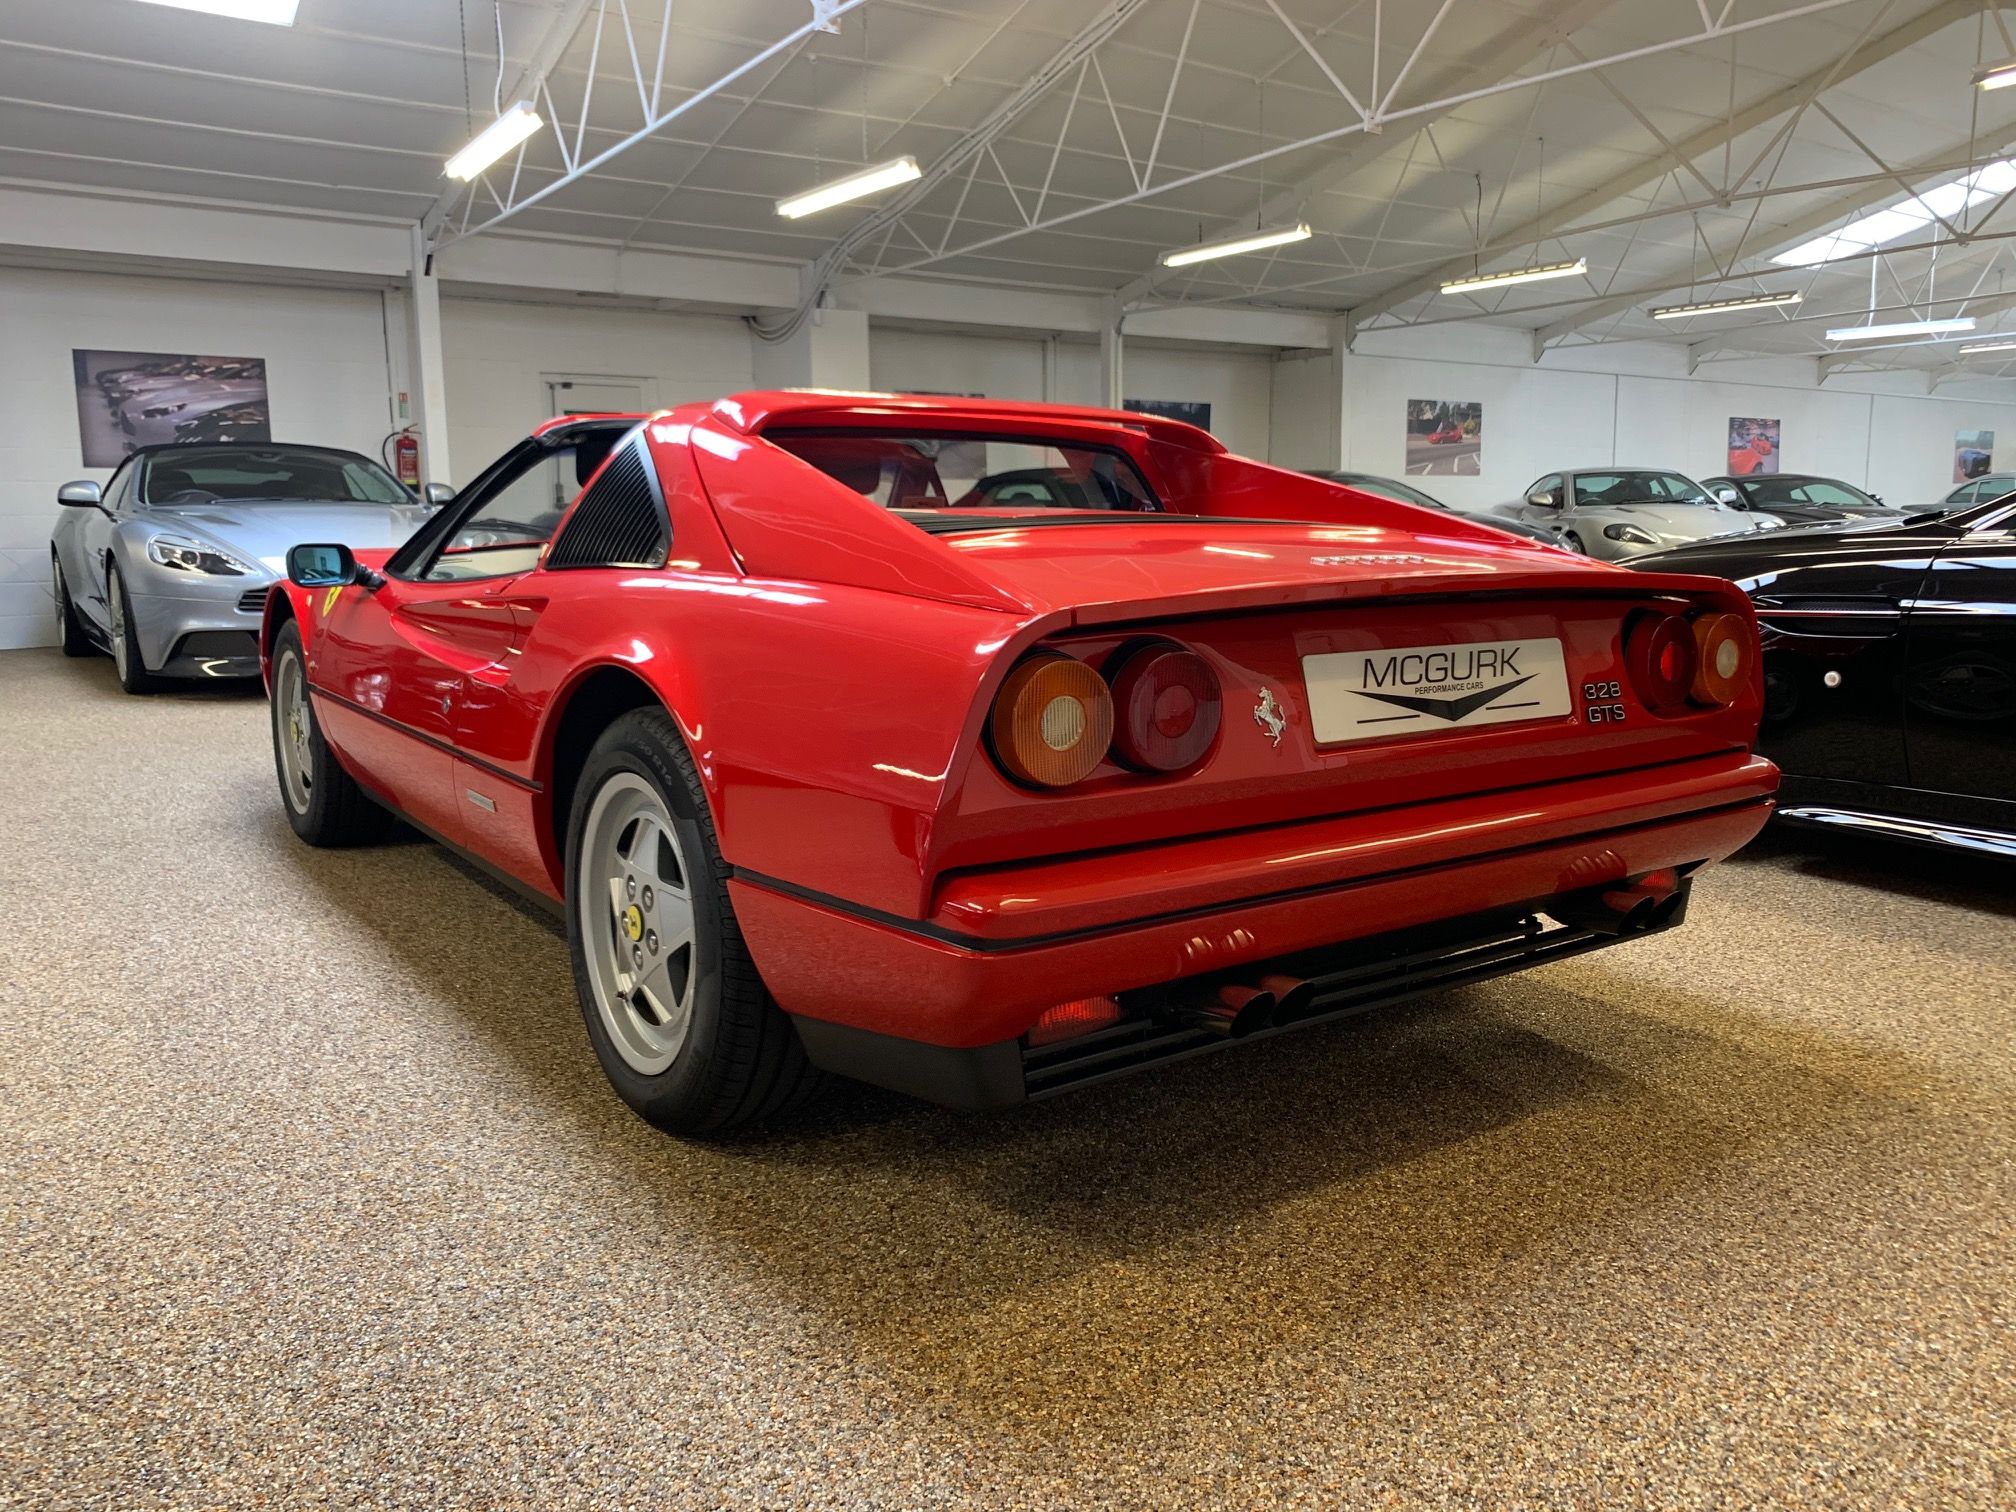 Ferrari 328 GTS for sale